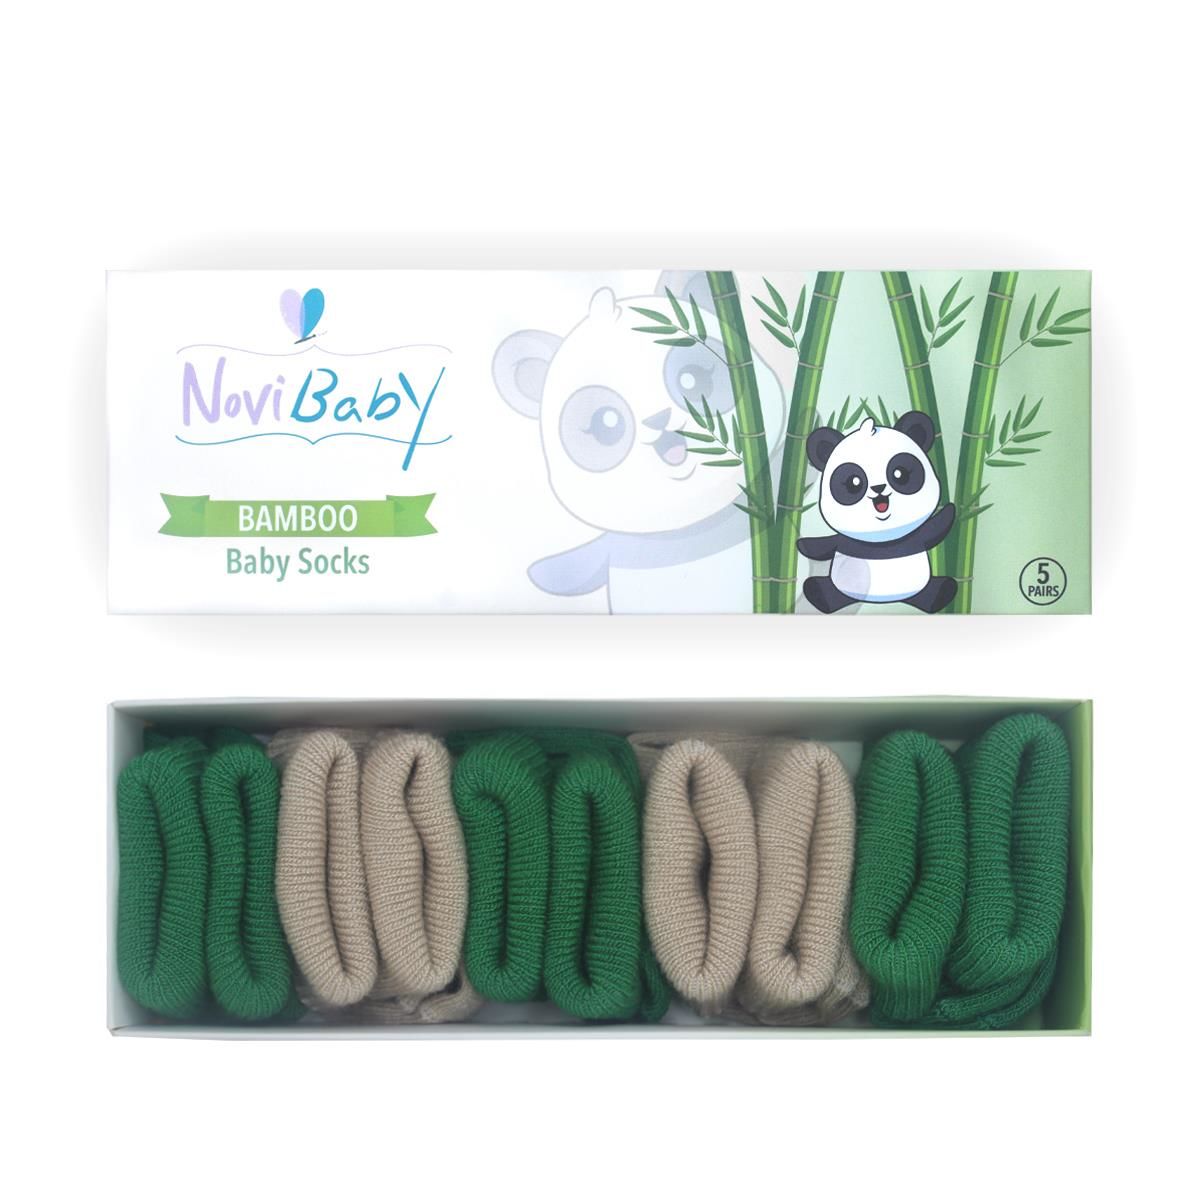 Novibaby 5'li Bambu Bebek Çorap I Greeny I 0-6 ay I Yenidoğan Kız Erkek Bebek Çorabı